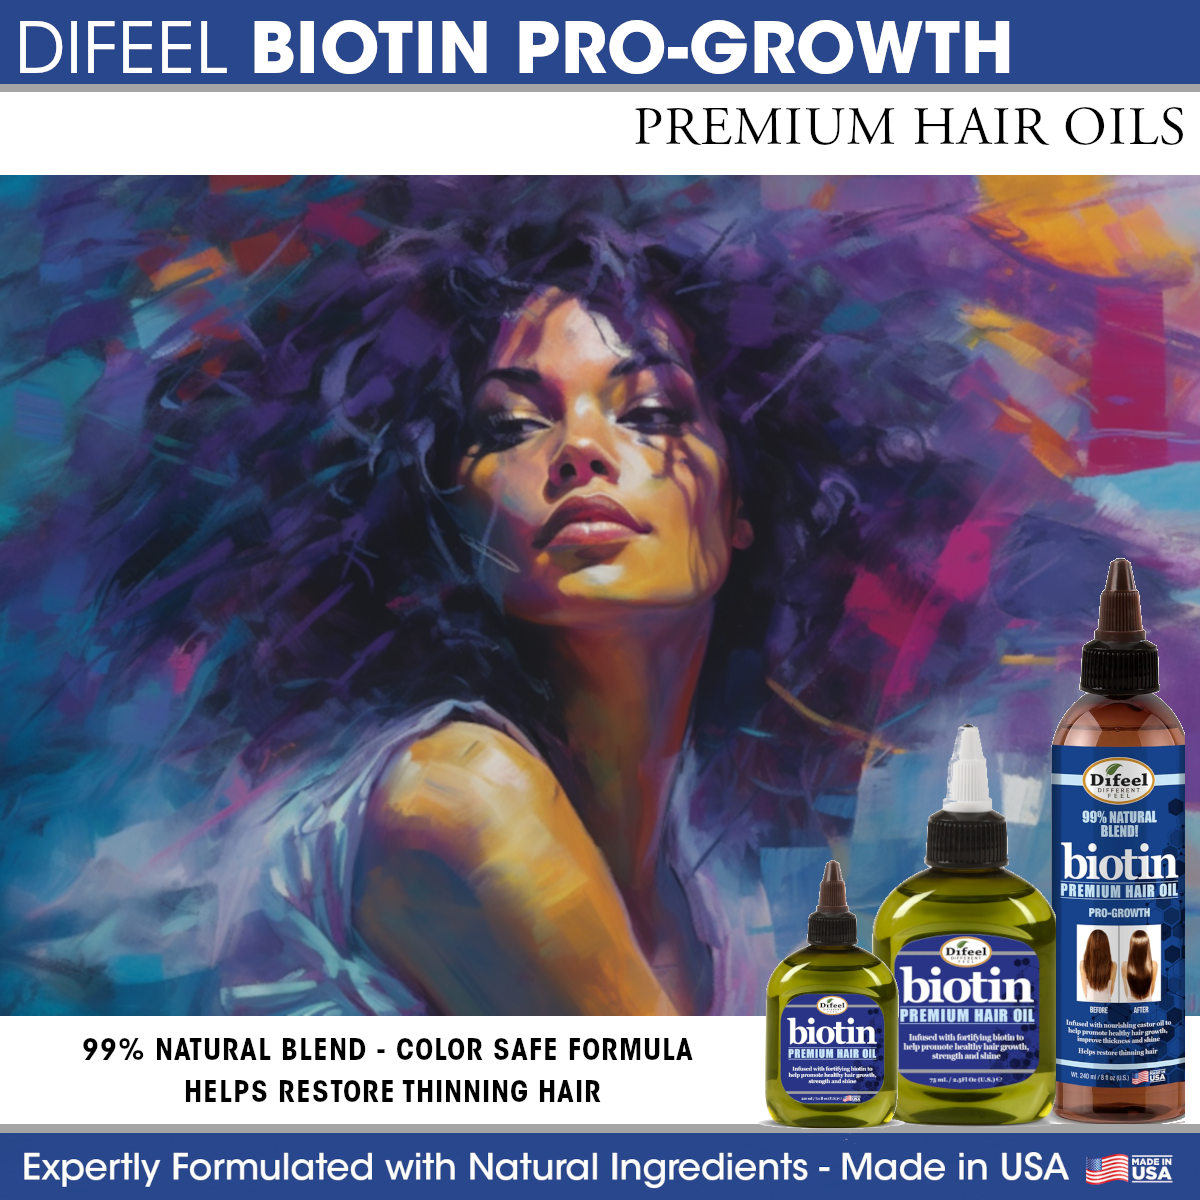 Difeel Biotin Pro Growth Premium Hair Oil 8 oz. (PACK OF 4)